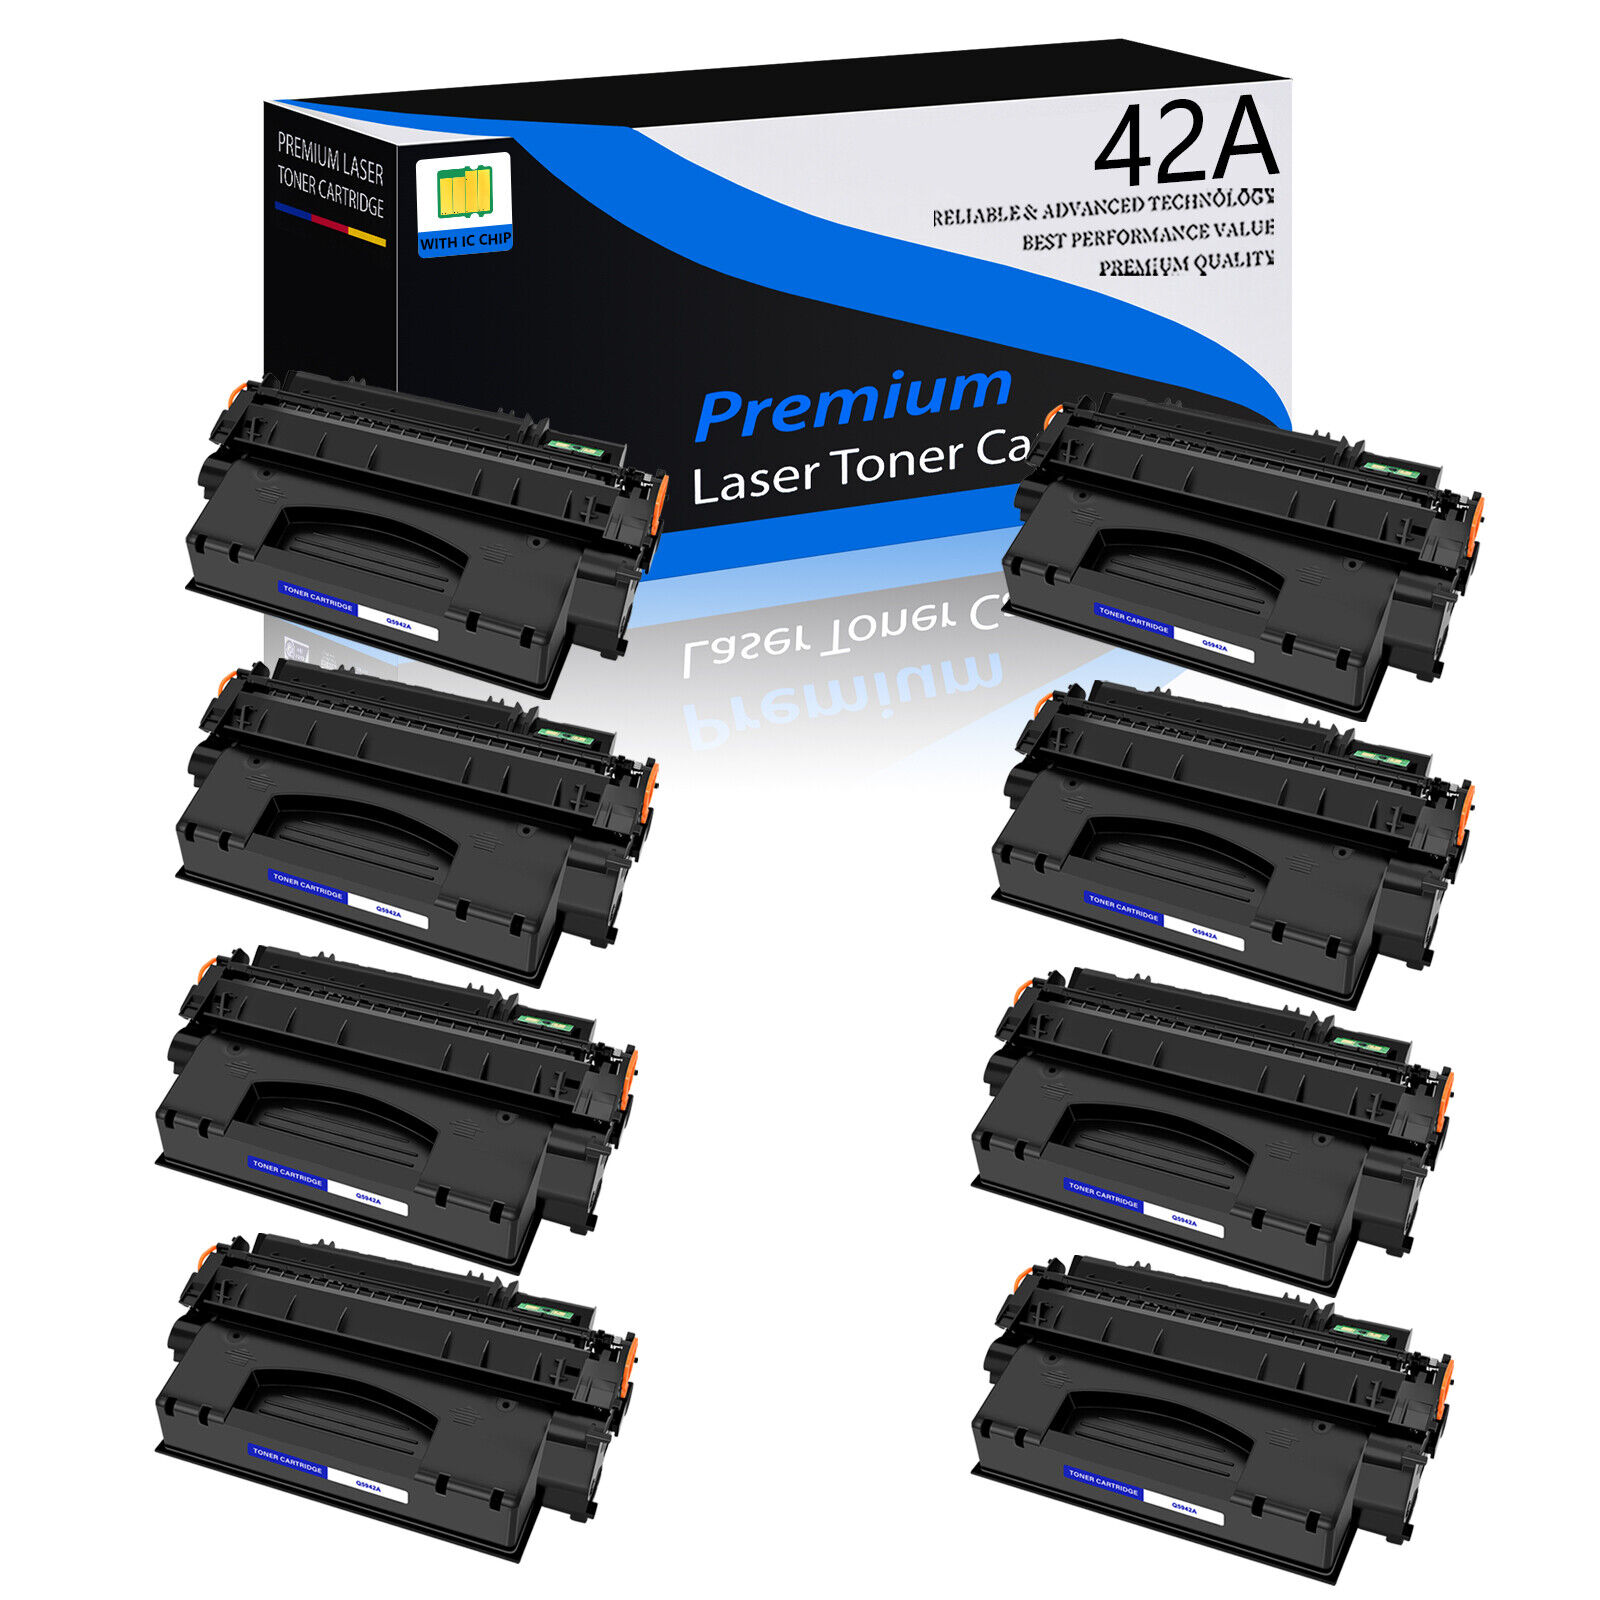 8PK Q5942A 42A Toner cartridge Compatible for HP LaserJet 4250n 4350n 4350dtn